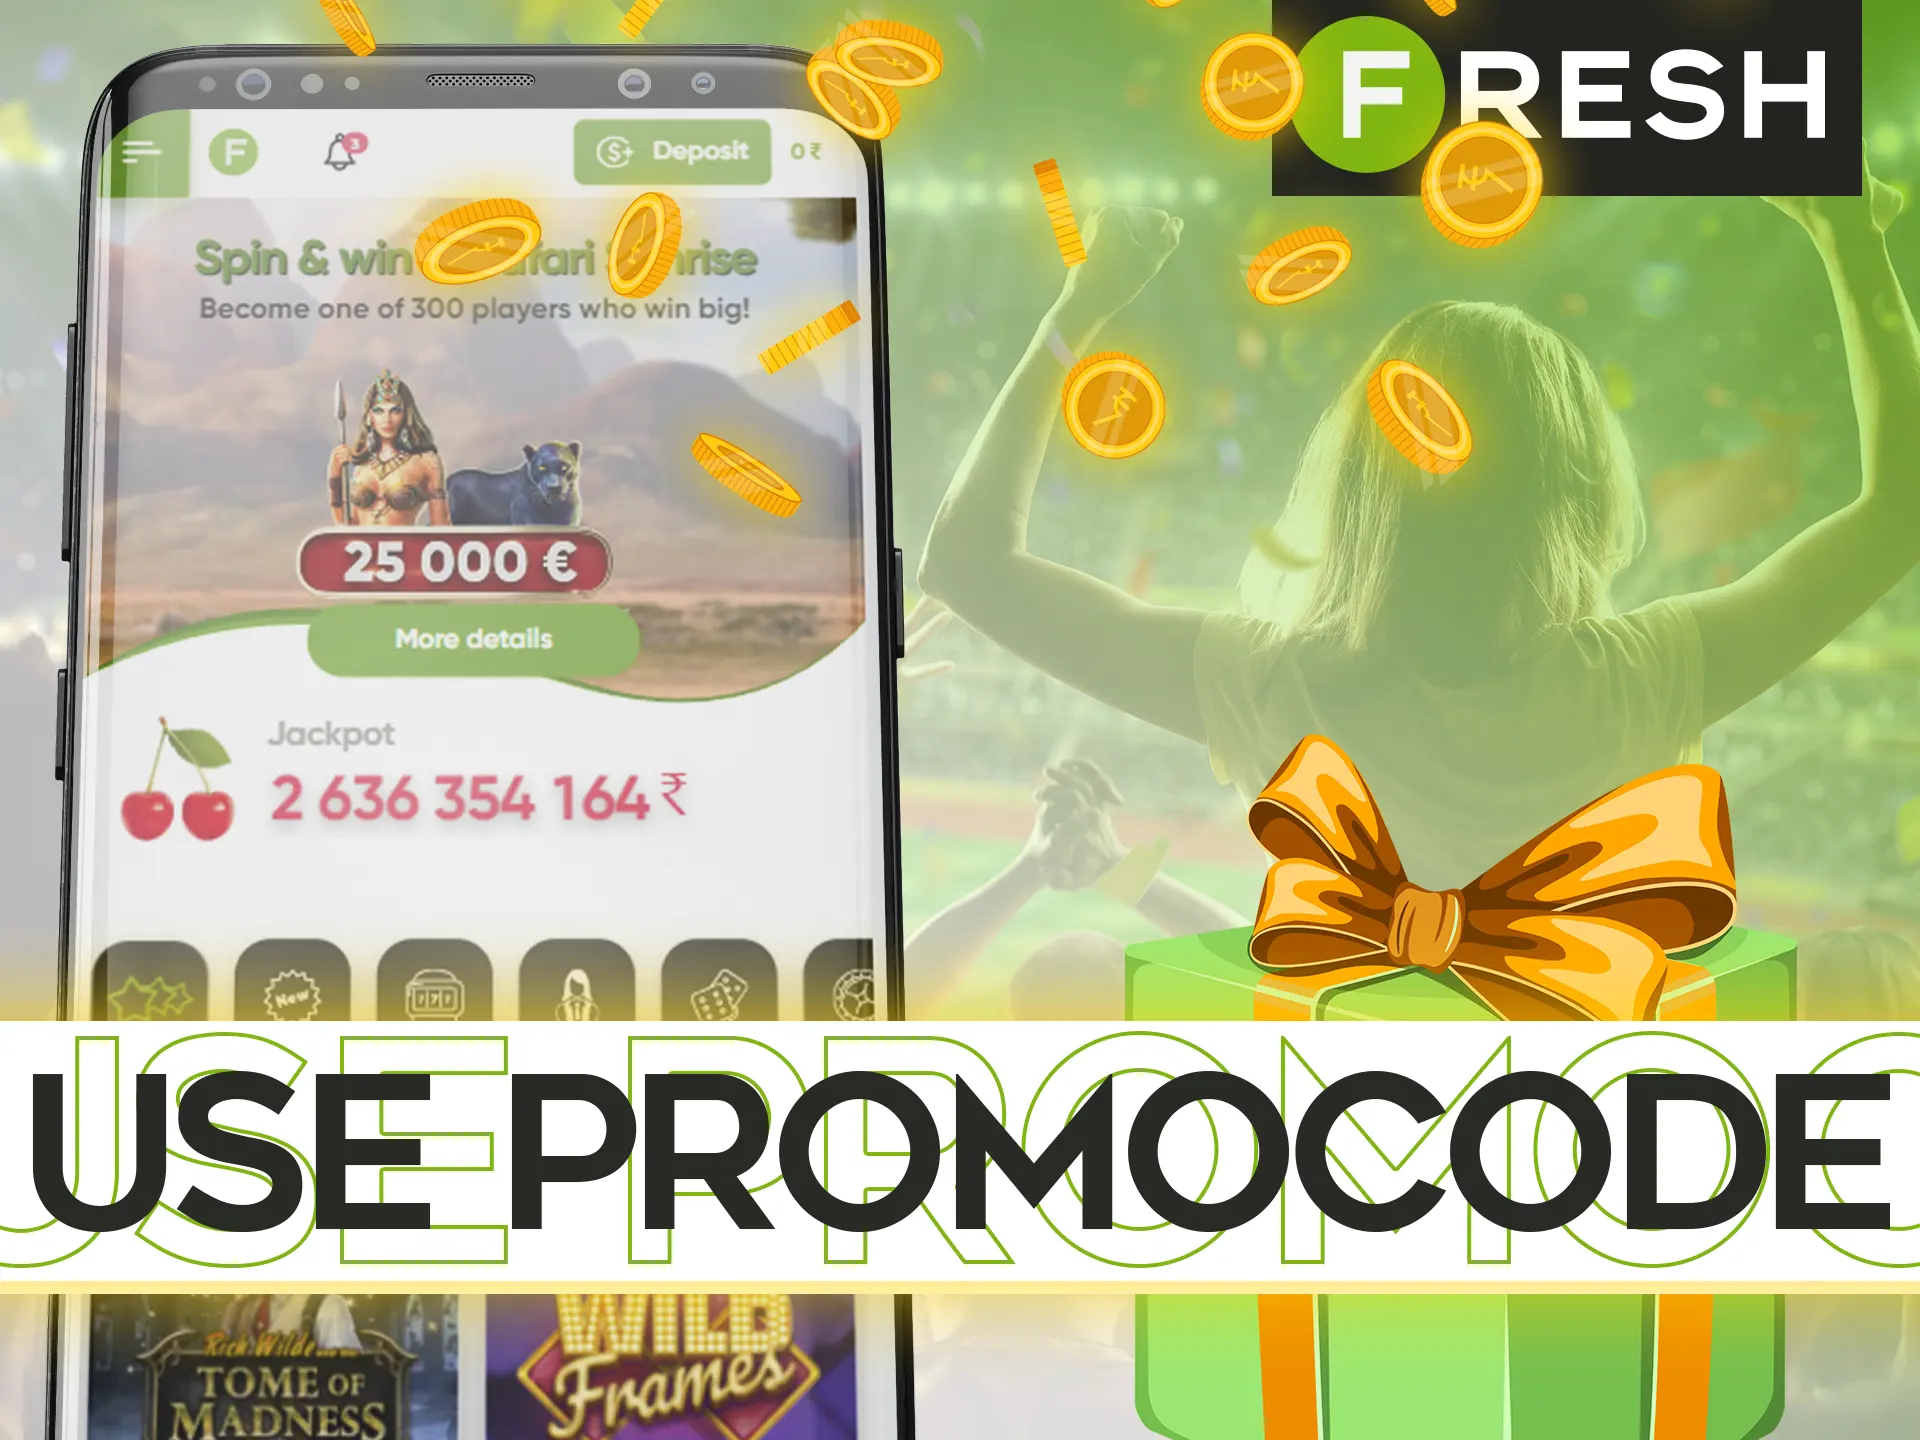 Insert promocode during registration in the Fresh Casino app.